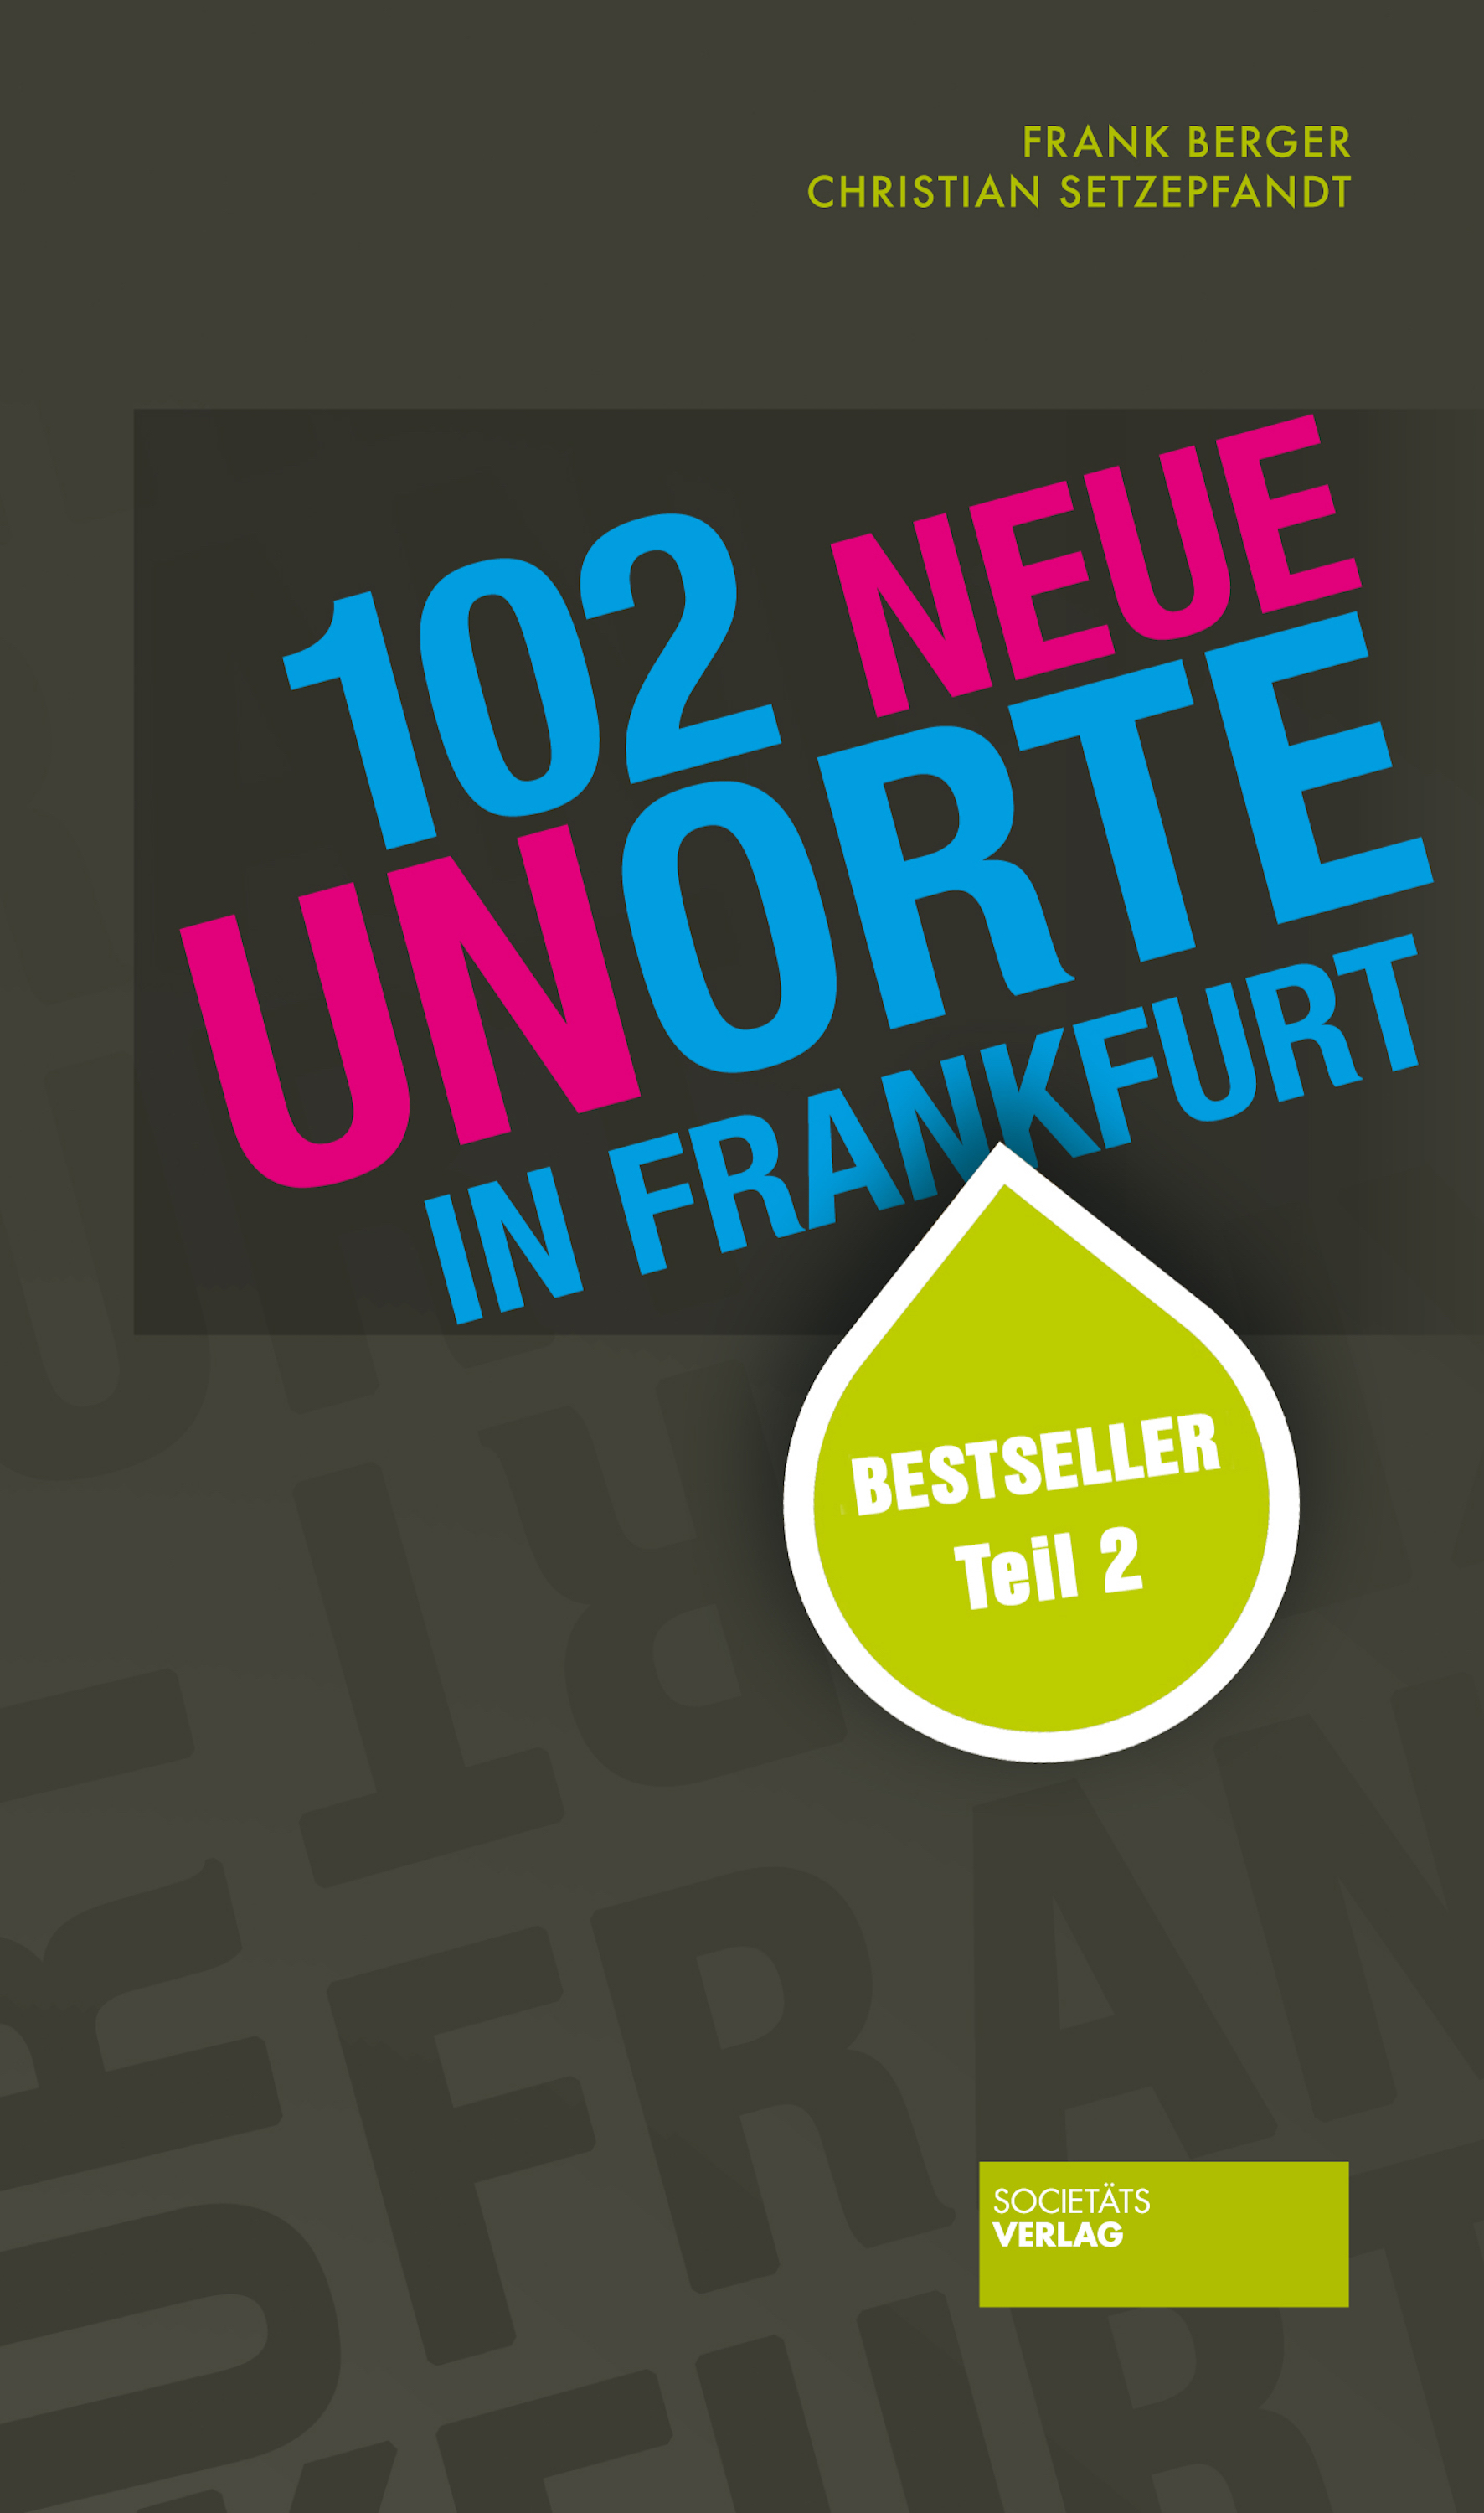 Frank Berger 102 neue Unorte in Frankfurt